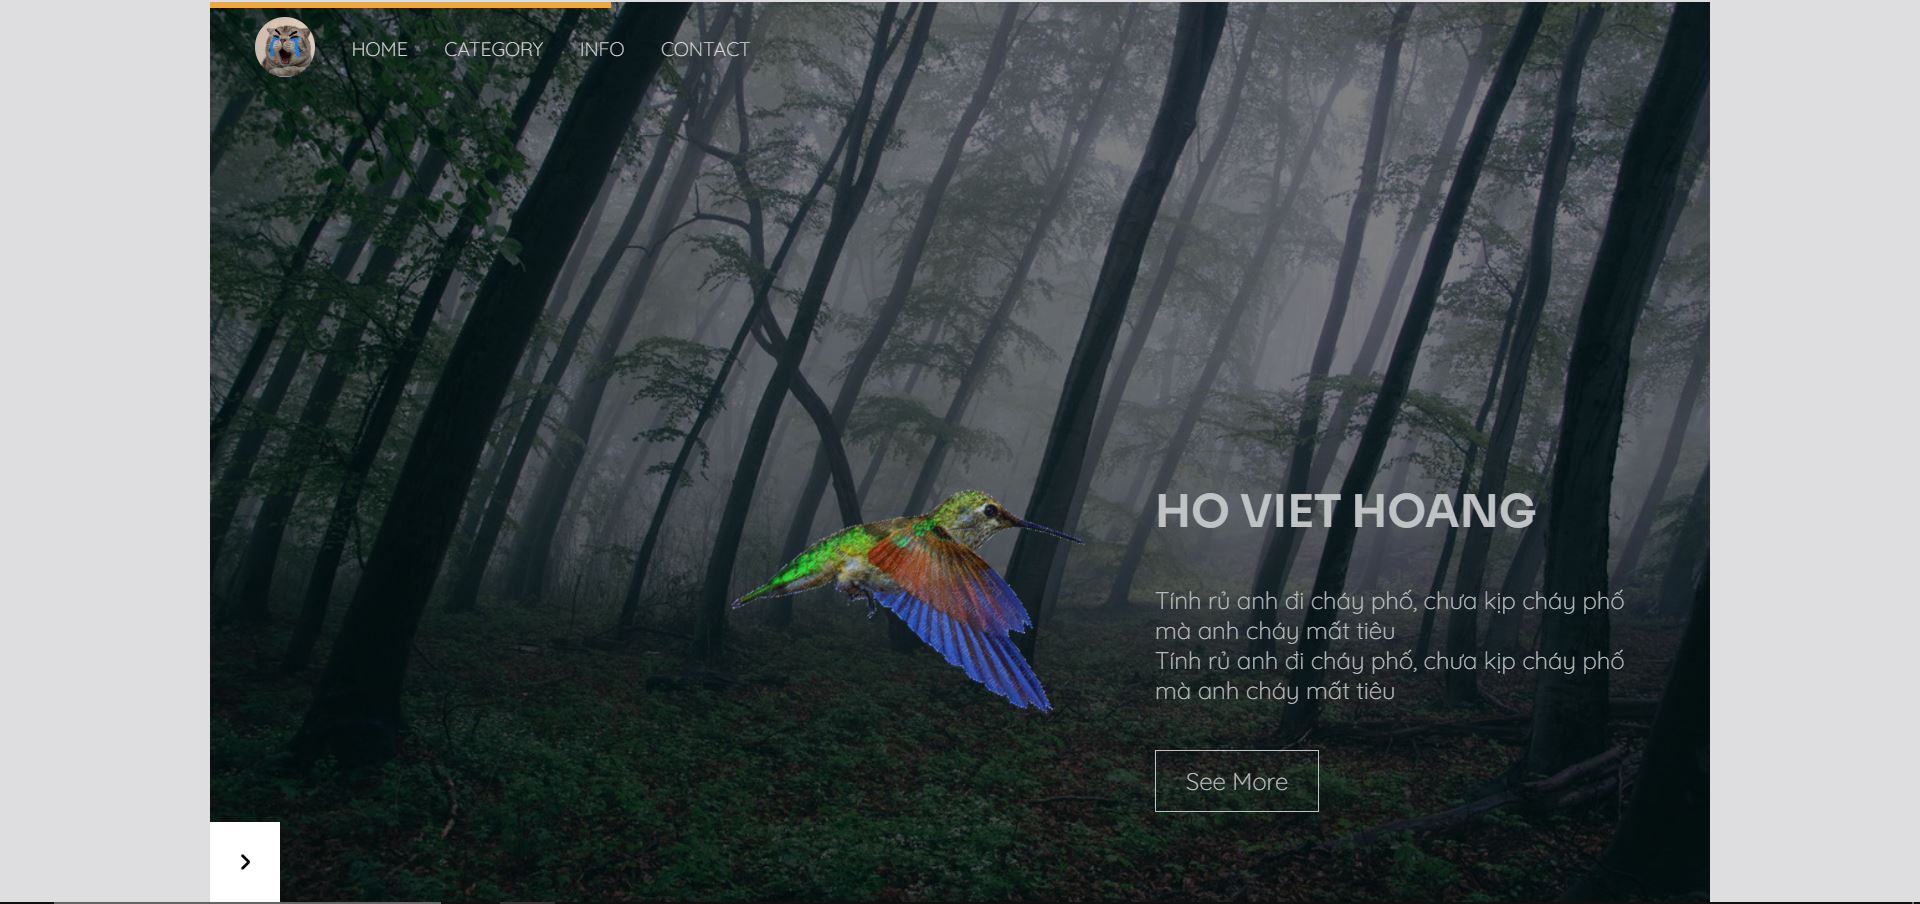 Interactive image carousel HTML CSS JavaScript